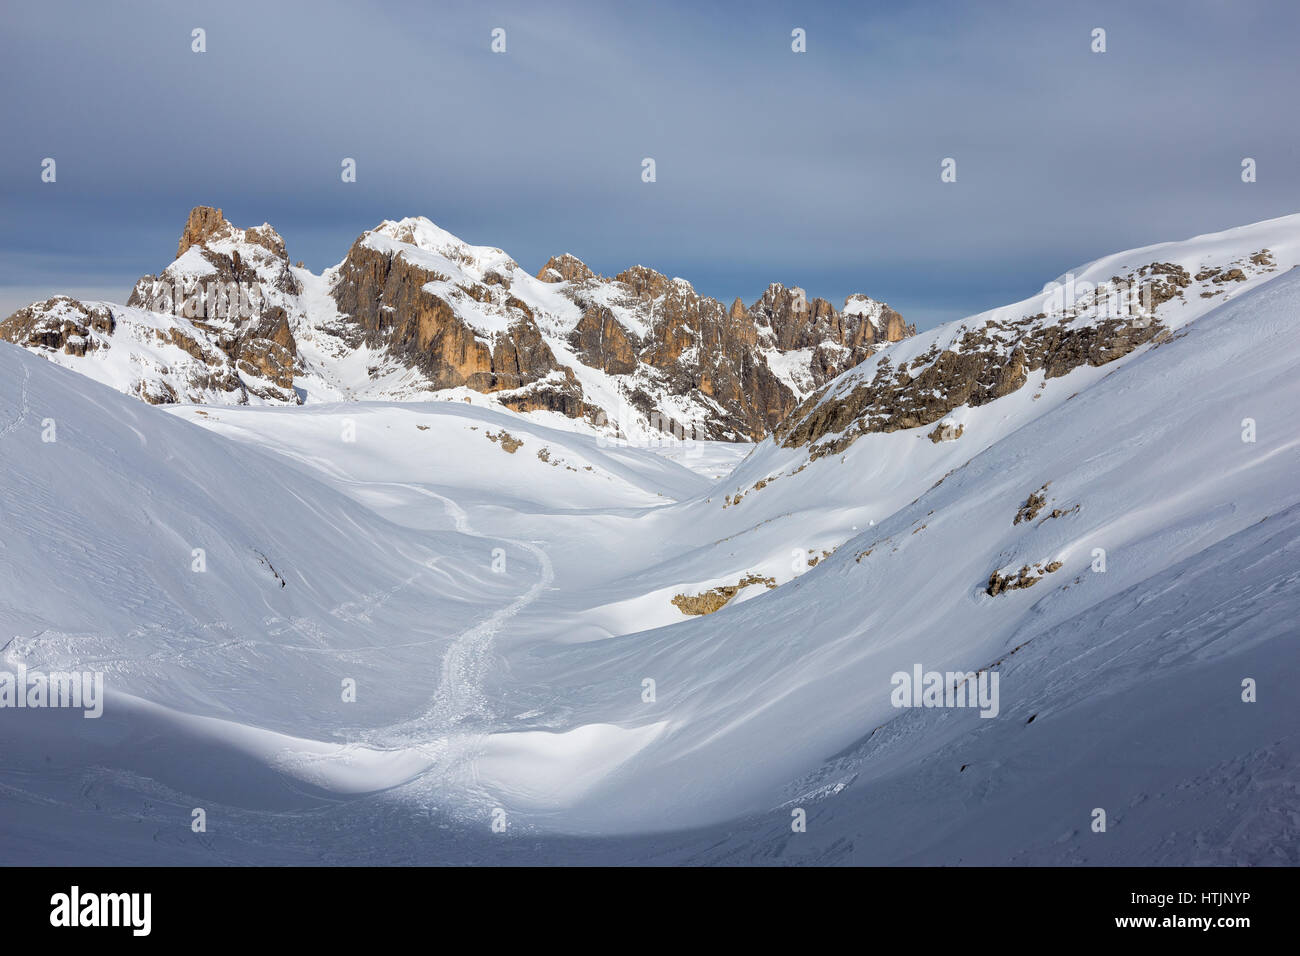 The Pale di San Martino mountain group in winter season, snow. The Trentino Dolomites. Italian Alps. Europe. Stock Photo